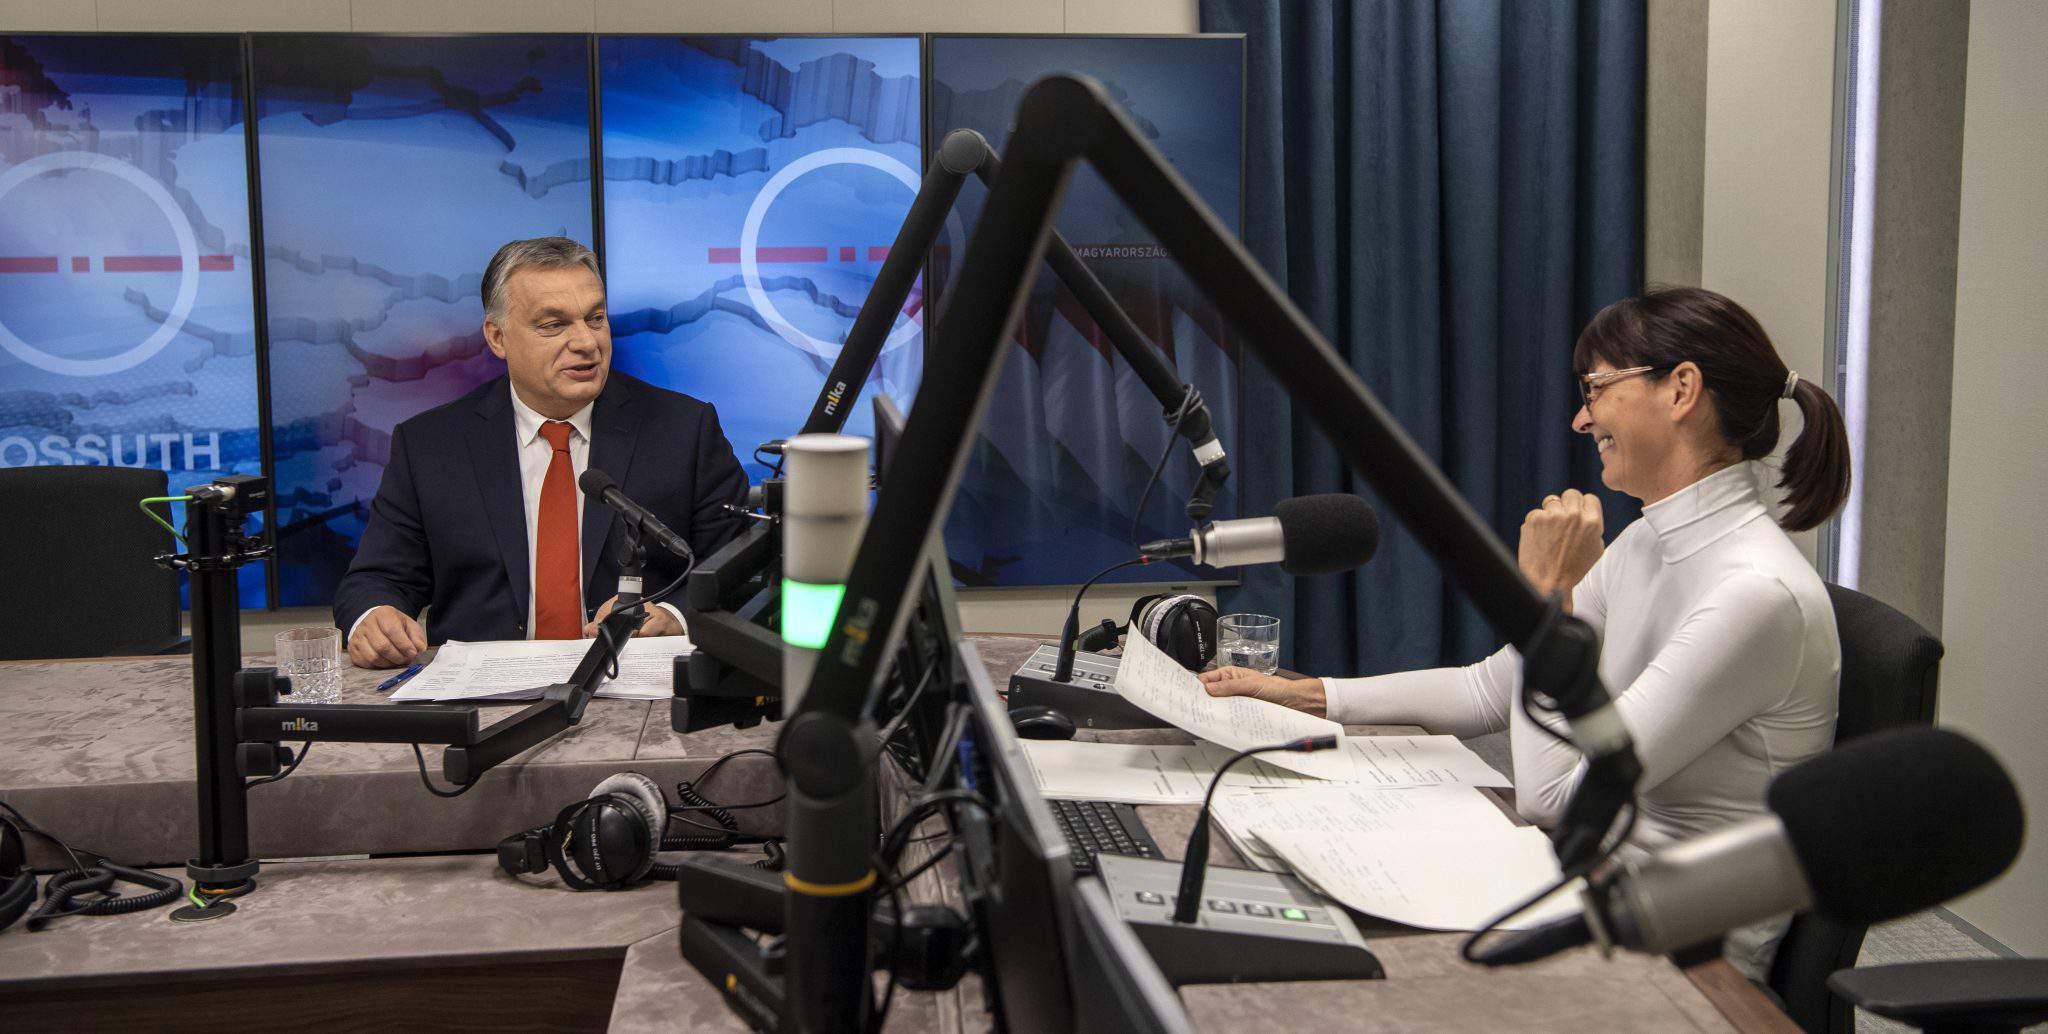 Orbán radio interview